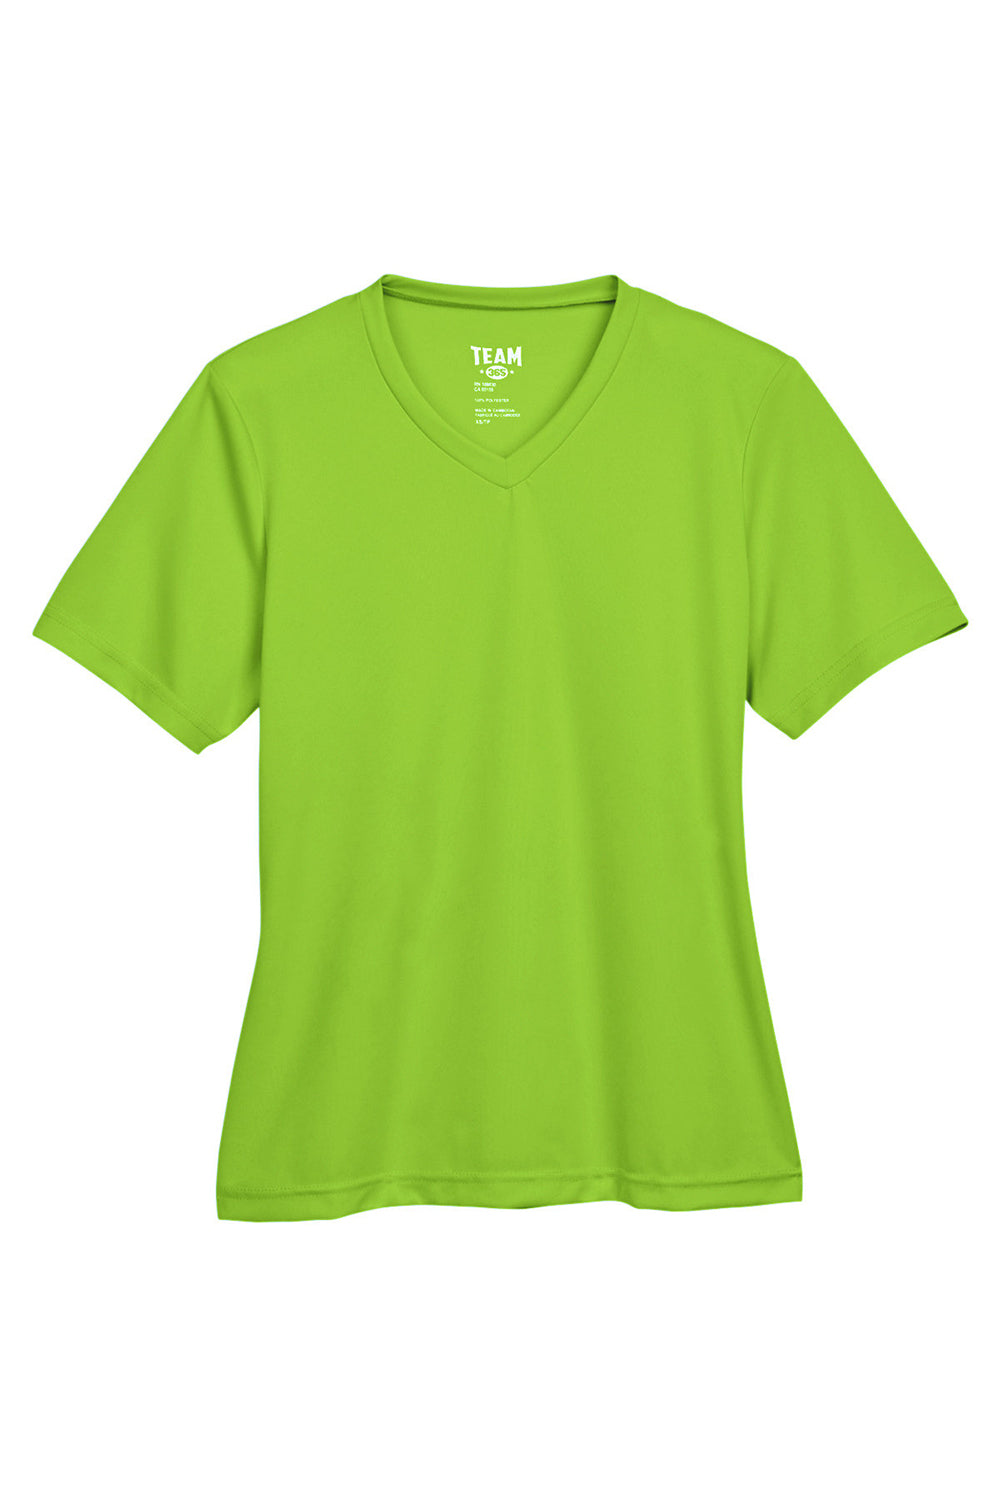 Team 365 TT11W Womens Zone Performance Moisture Wicking Short Sleeve V-Neck T-Shirt Acid Green Flat Front